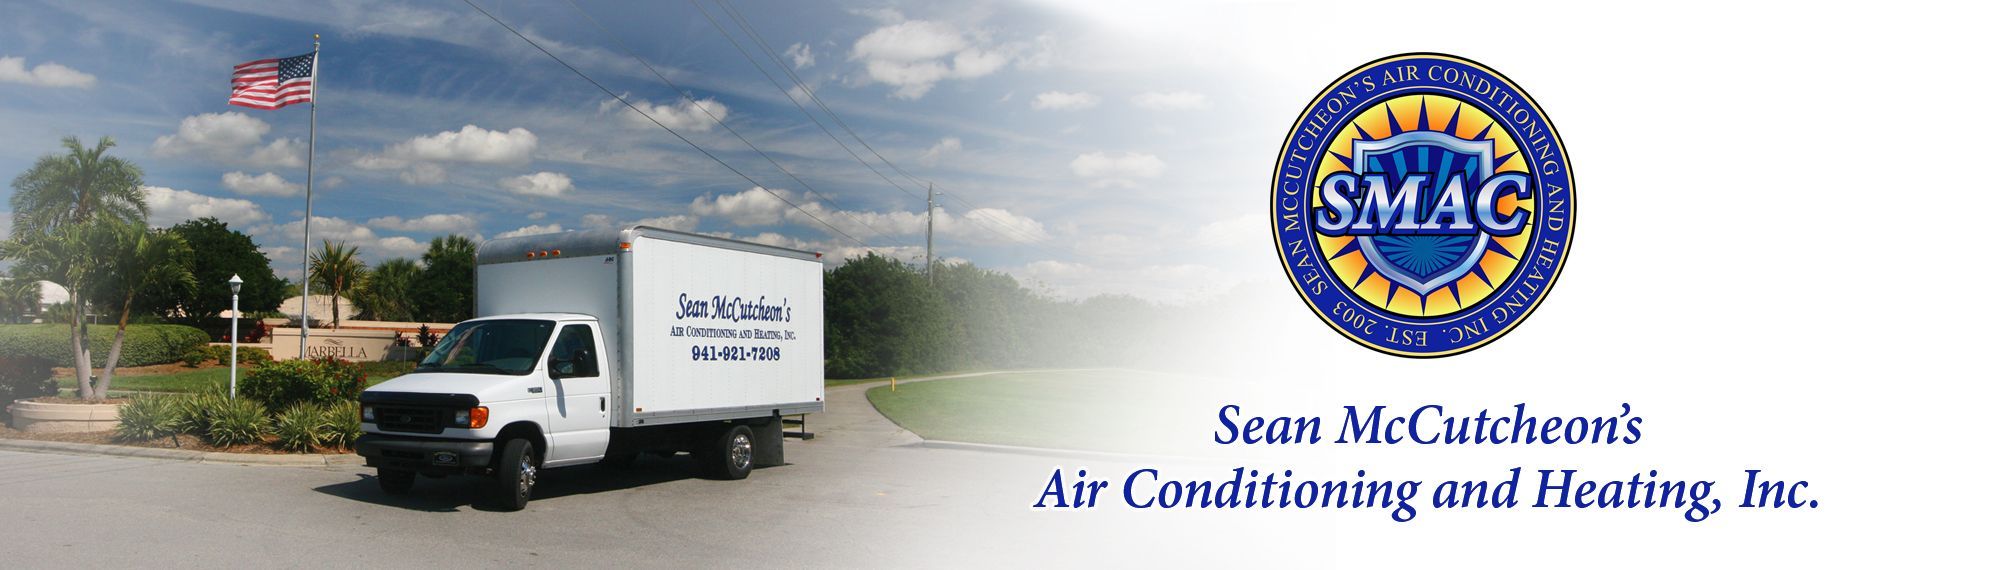  Sean McCutcheon's Air Conditioning and Heating Sarasota Florida